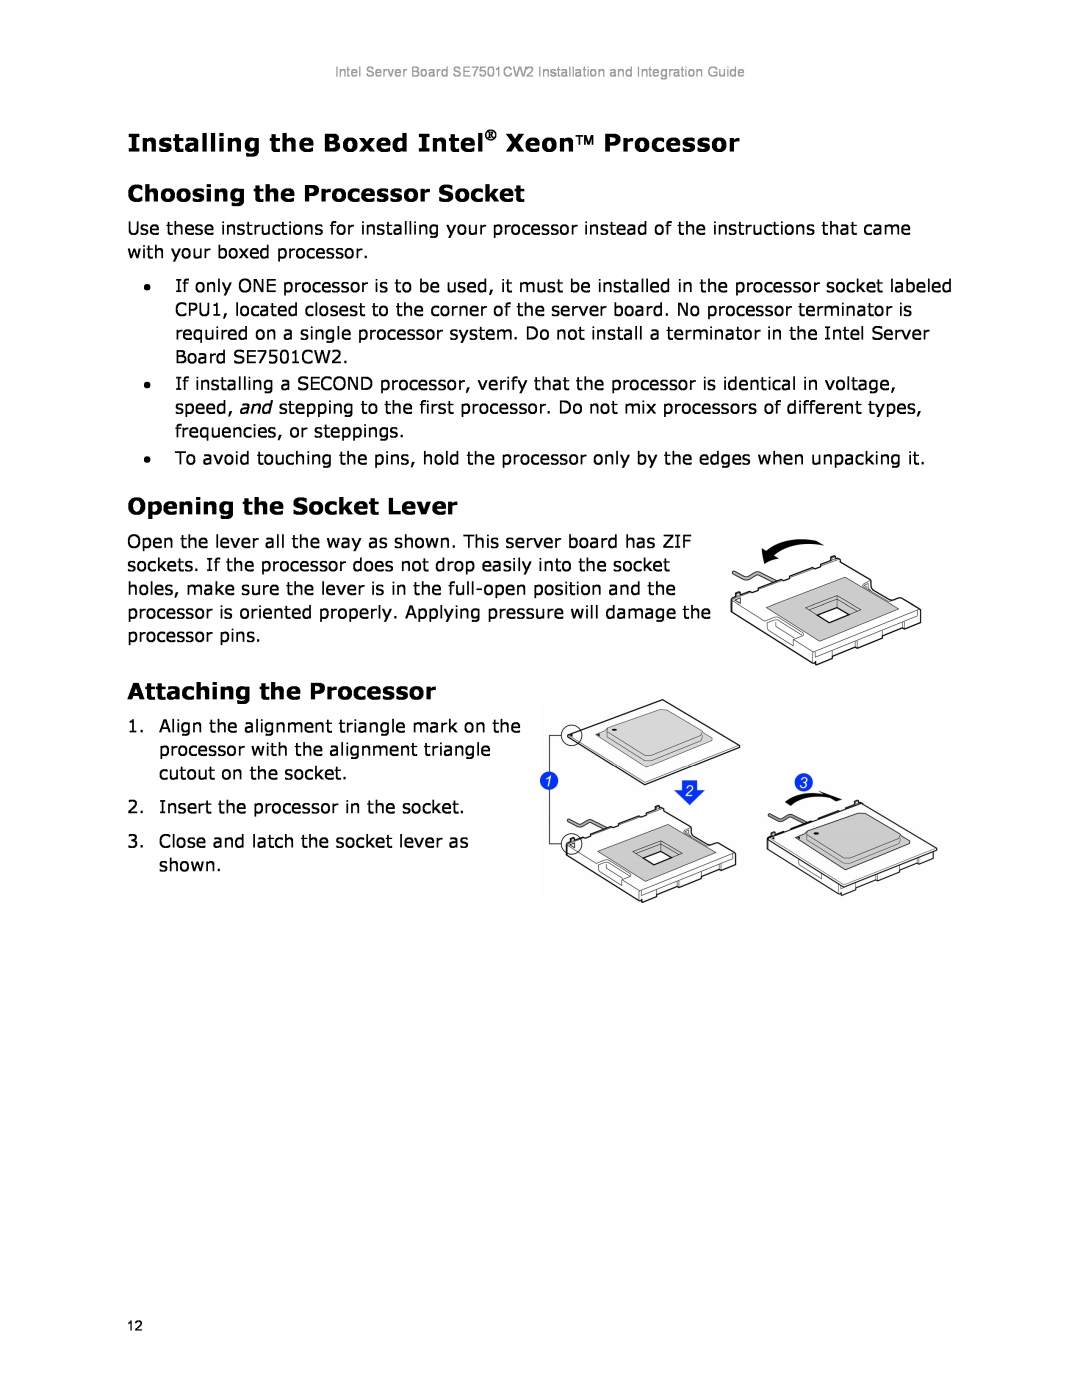 Intel SE7501CW2 manual Installing the Boxed Intel Xeon Processor, Choosing the Processor Socket, Opening the Socket Lever 